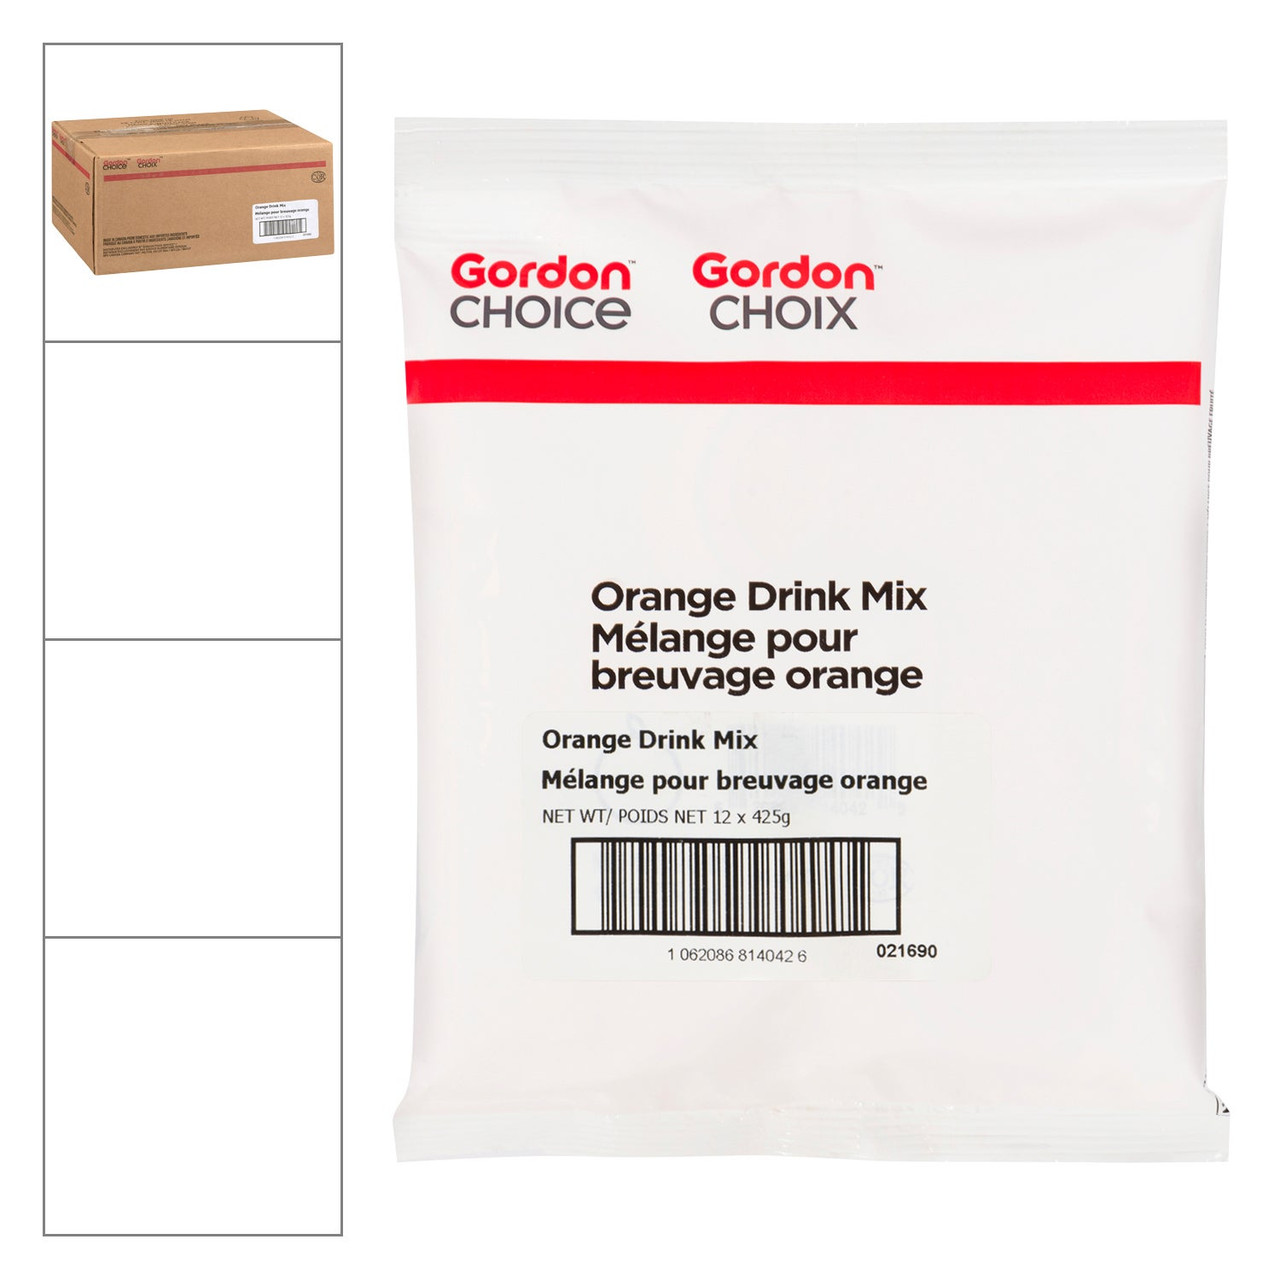 Gordon Choice Orange Drink Mix